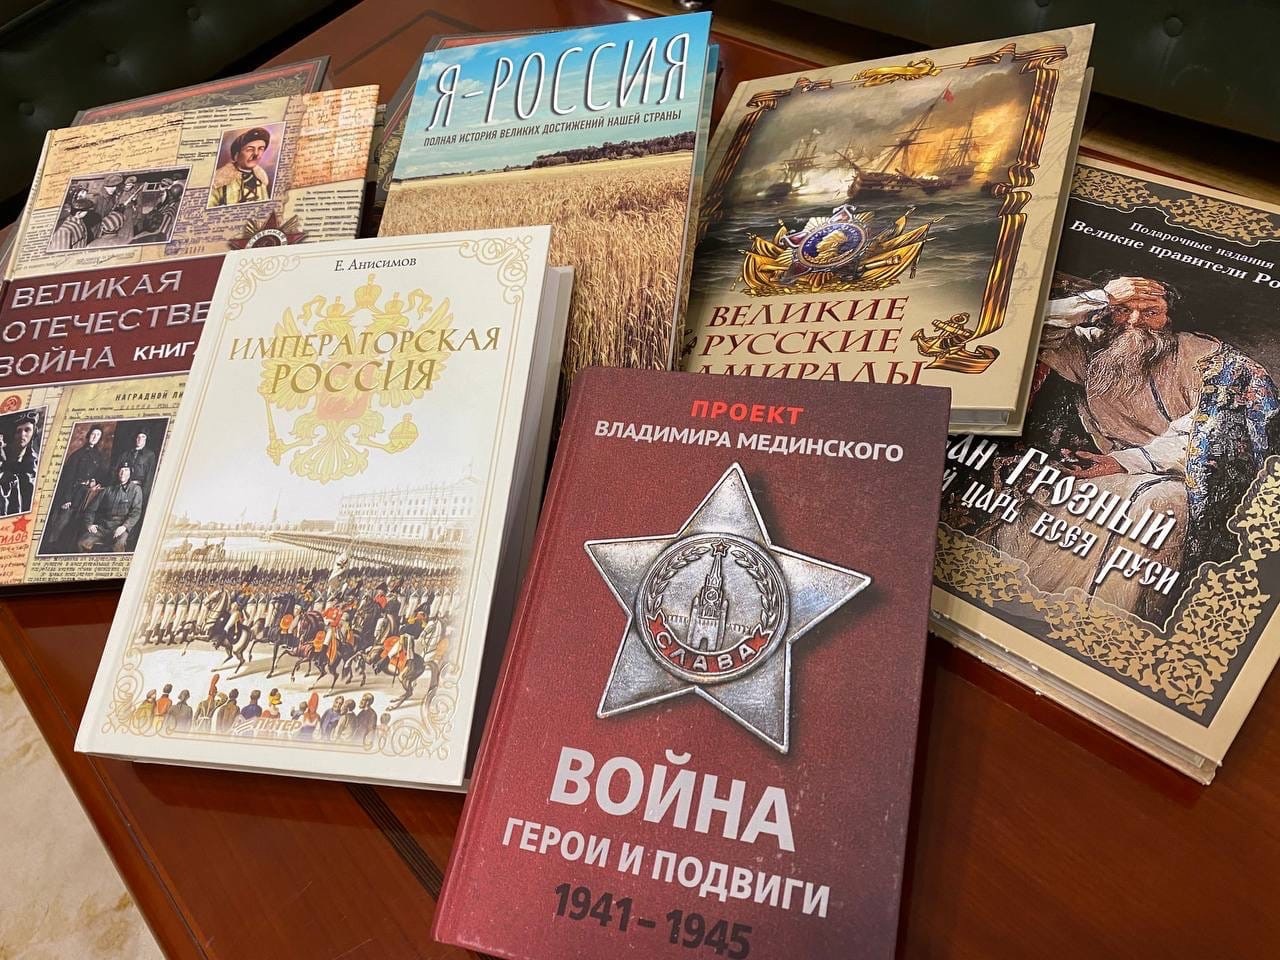 Губернатору Костромской области подарили на юбилей книги про Дядю Фёдора и Ивана Грозного